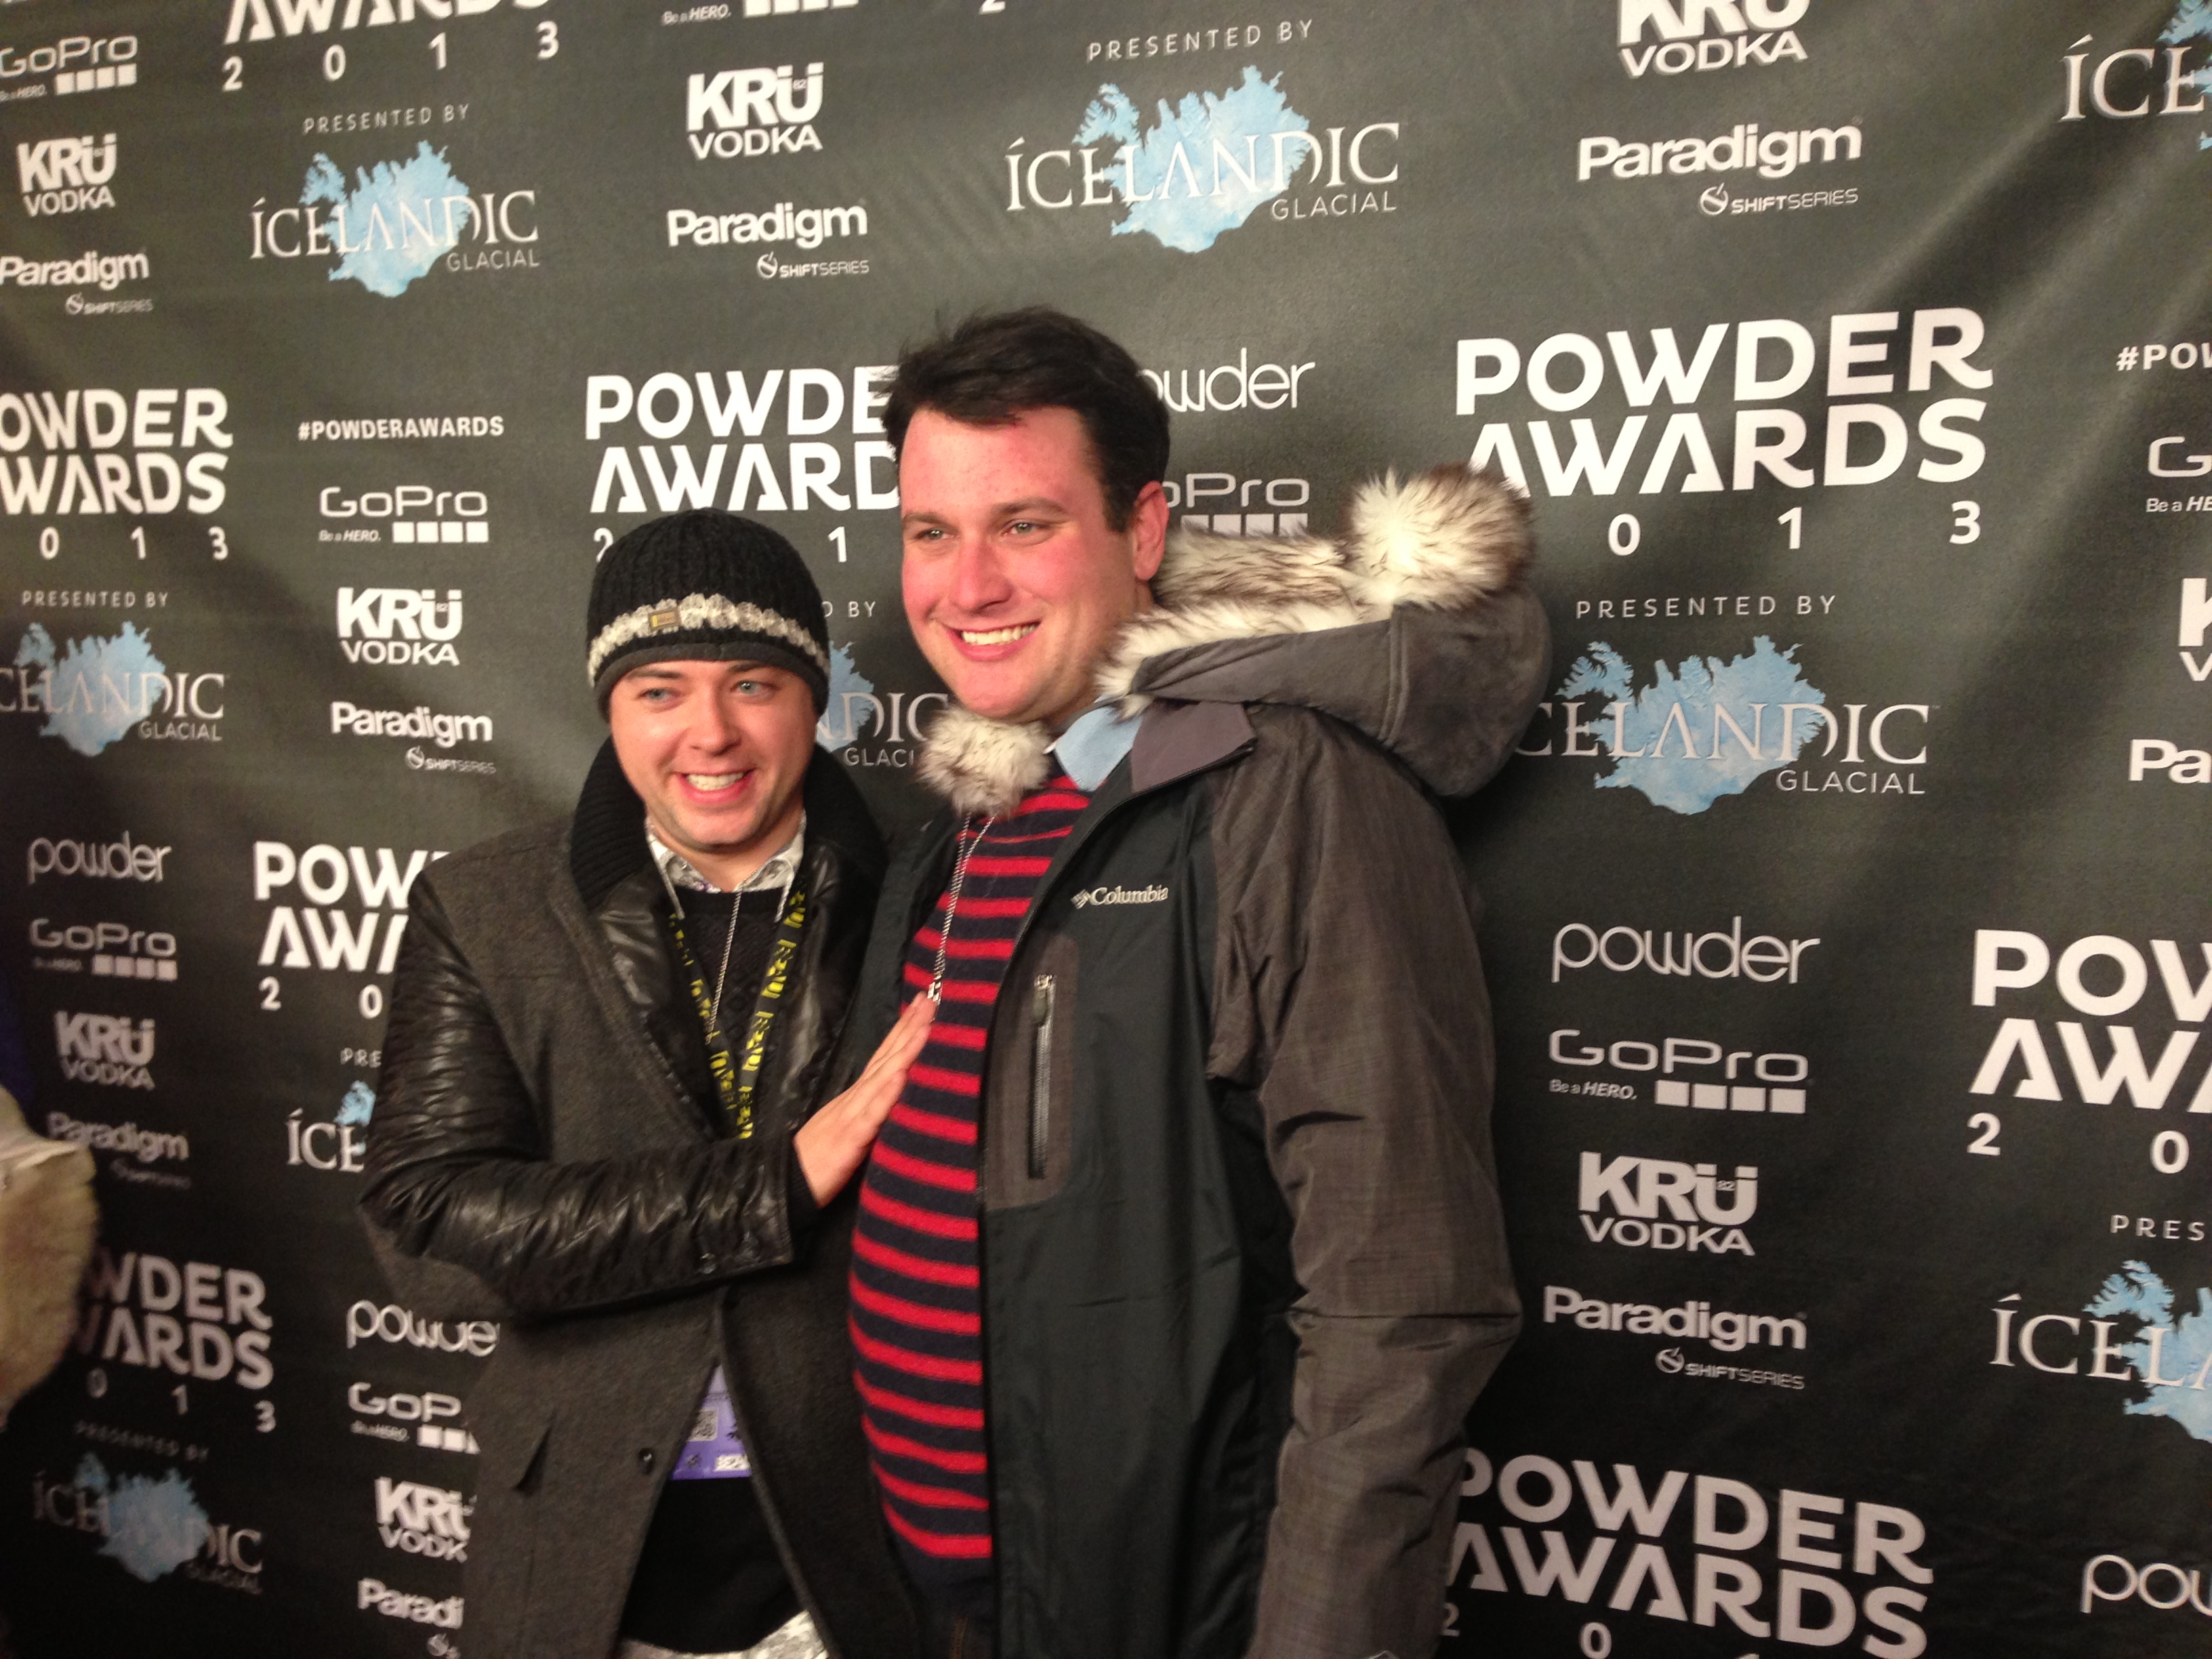 Matthew Smith and Solly Hemus at the 2013 Powder Awards